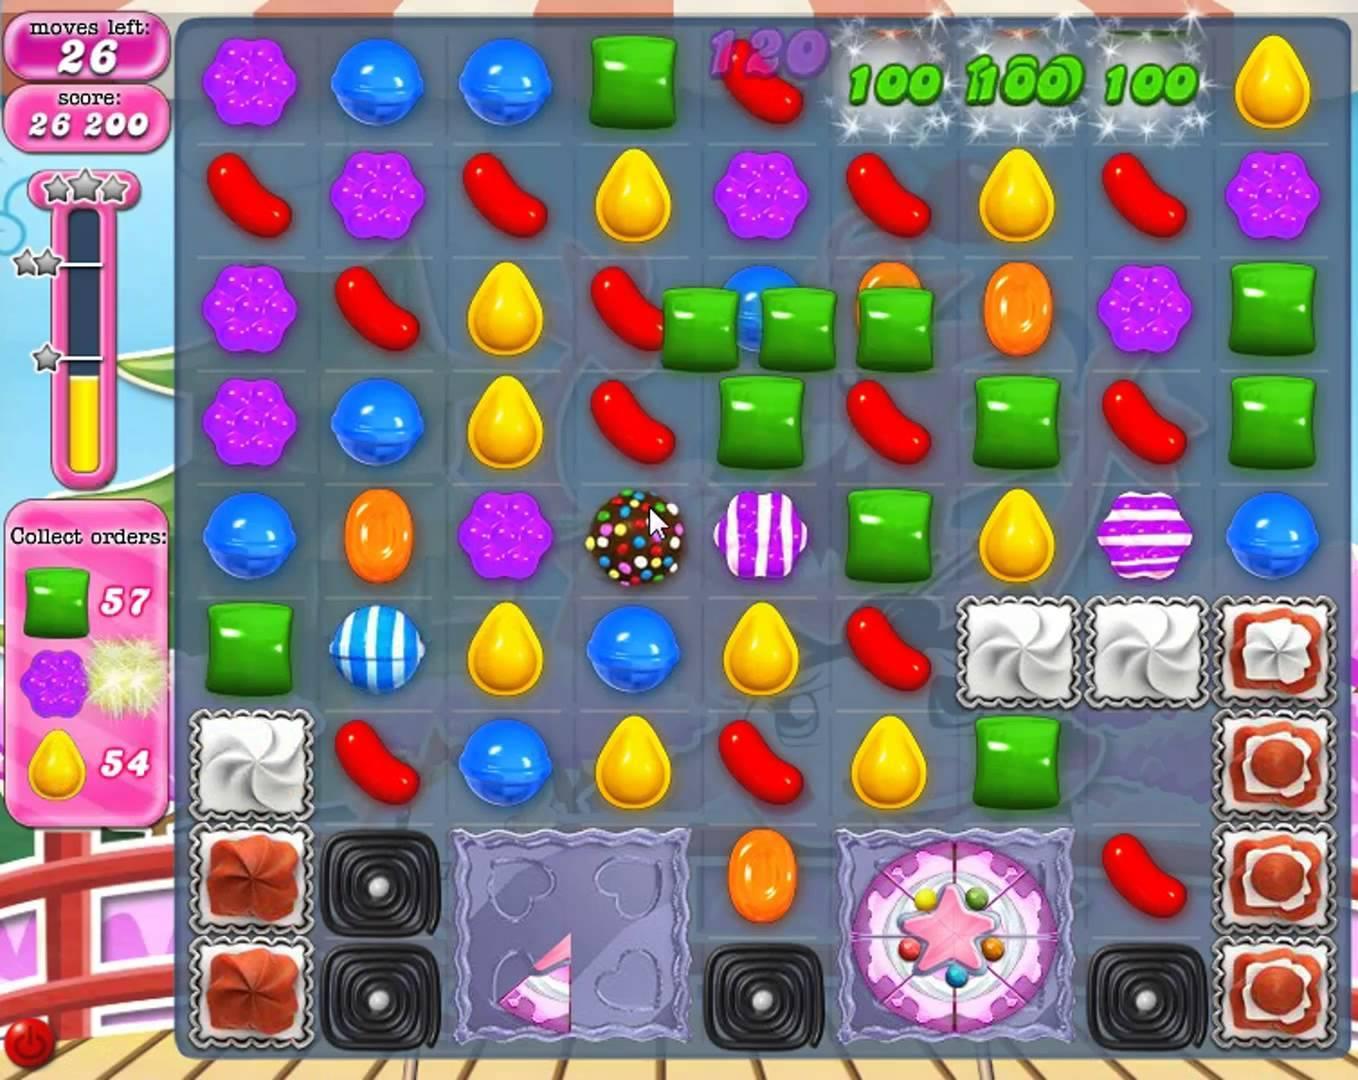 Candy crush saga 200 moves apk download